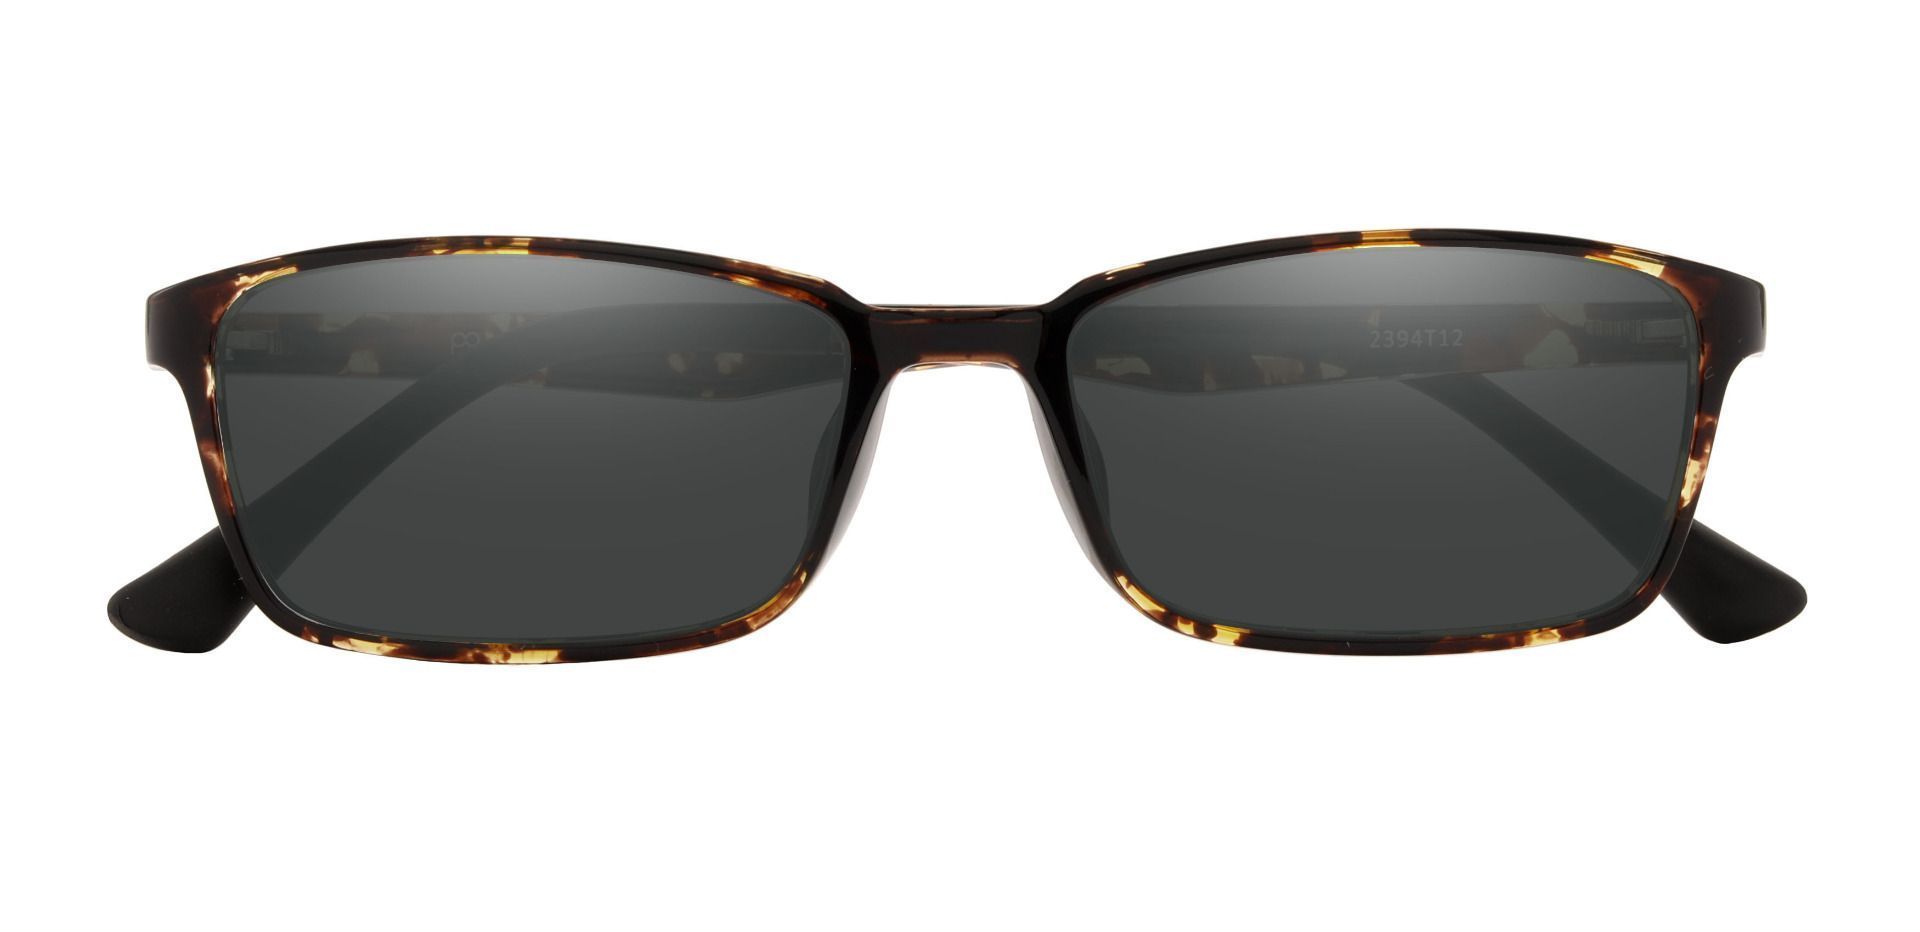 San Dimas Rectangle Prescription Sunglasses - Tortoise Frame With Gray Lenses